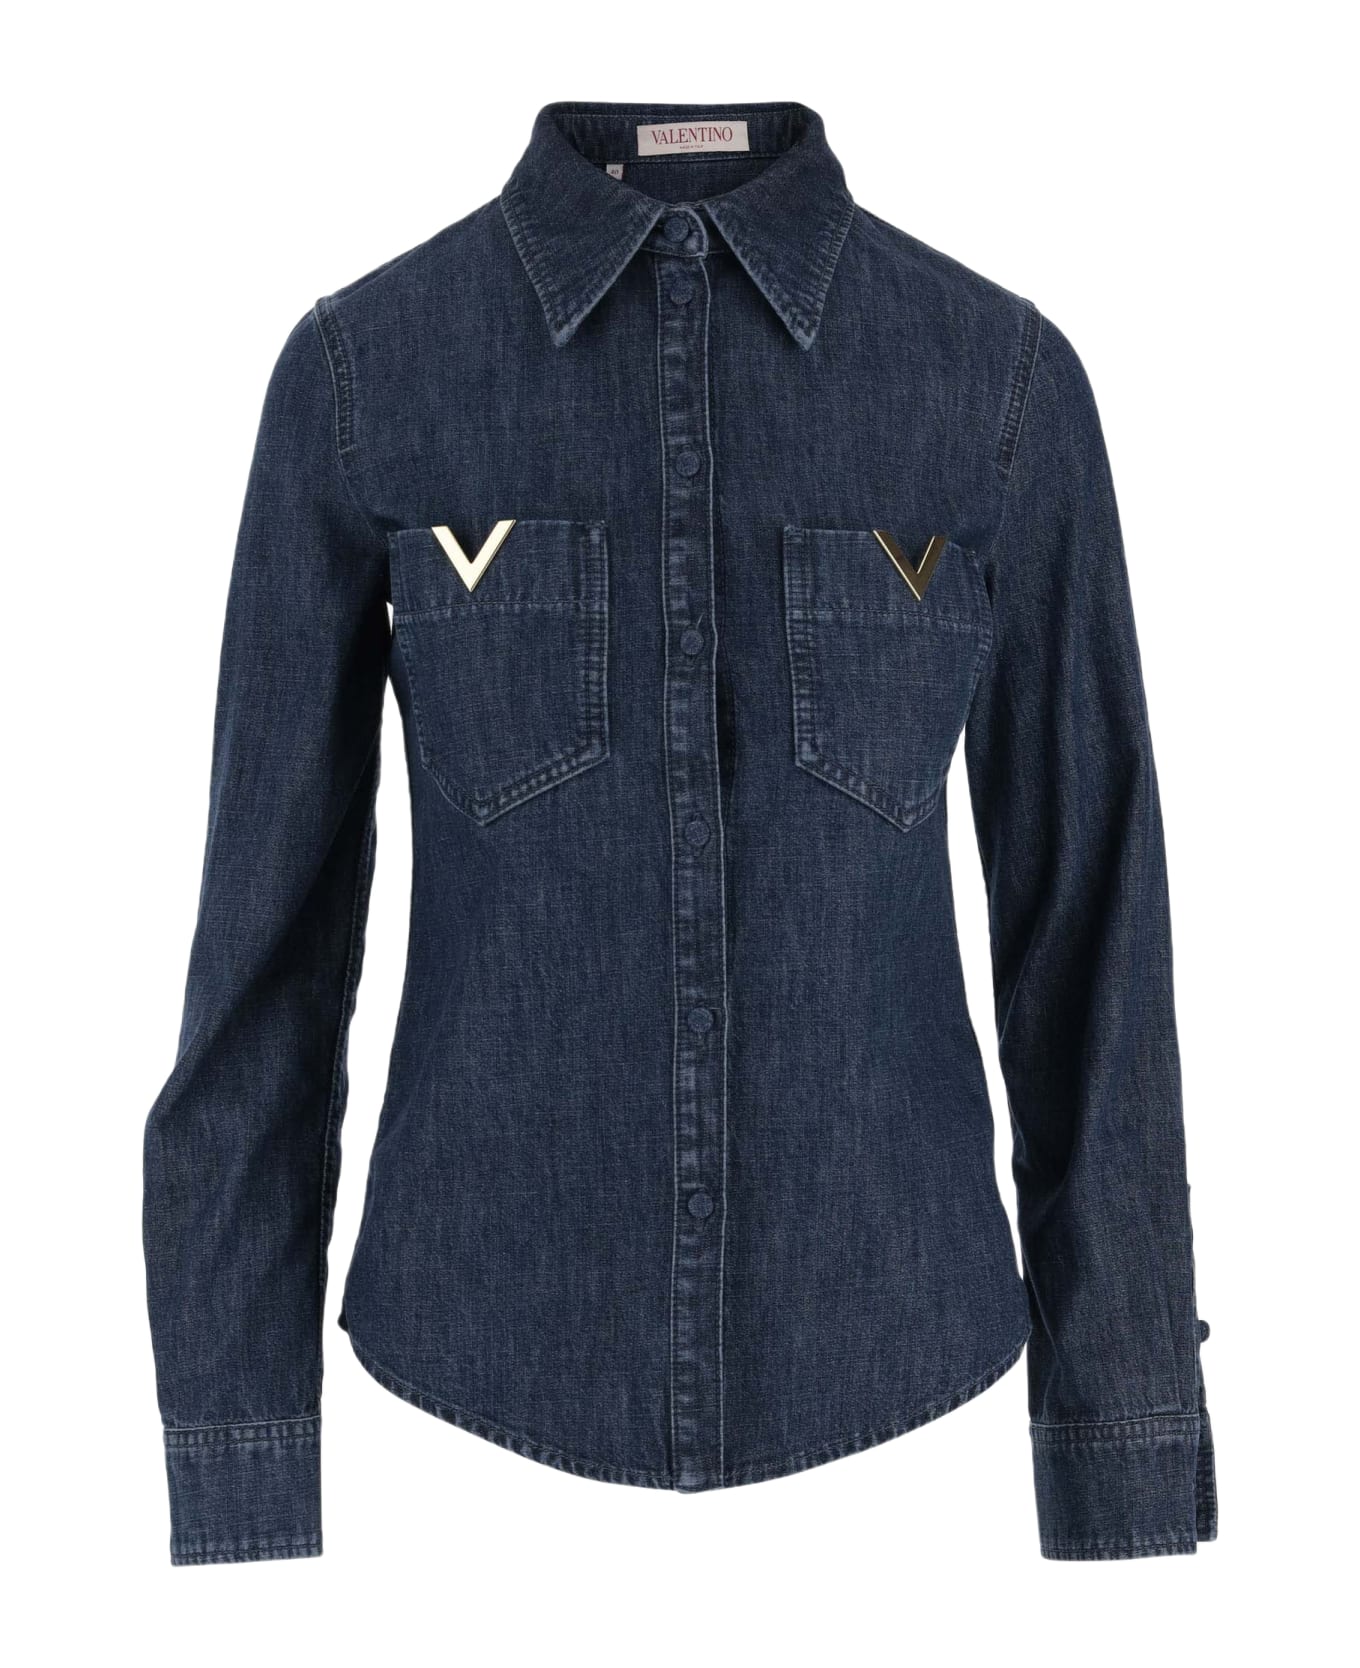 Valentino Cotton Denim Shirt With Vlogo - Denim